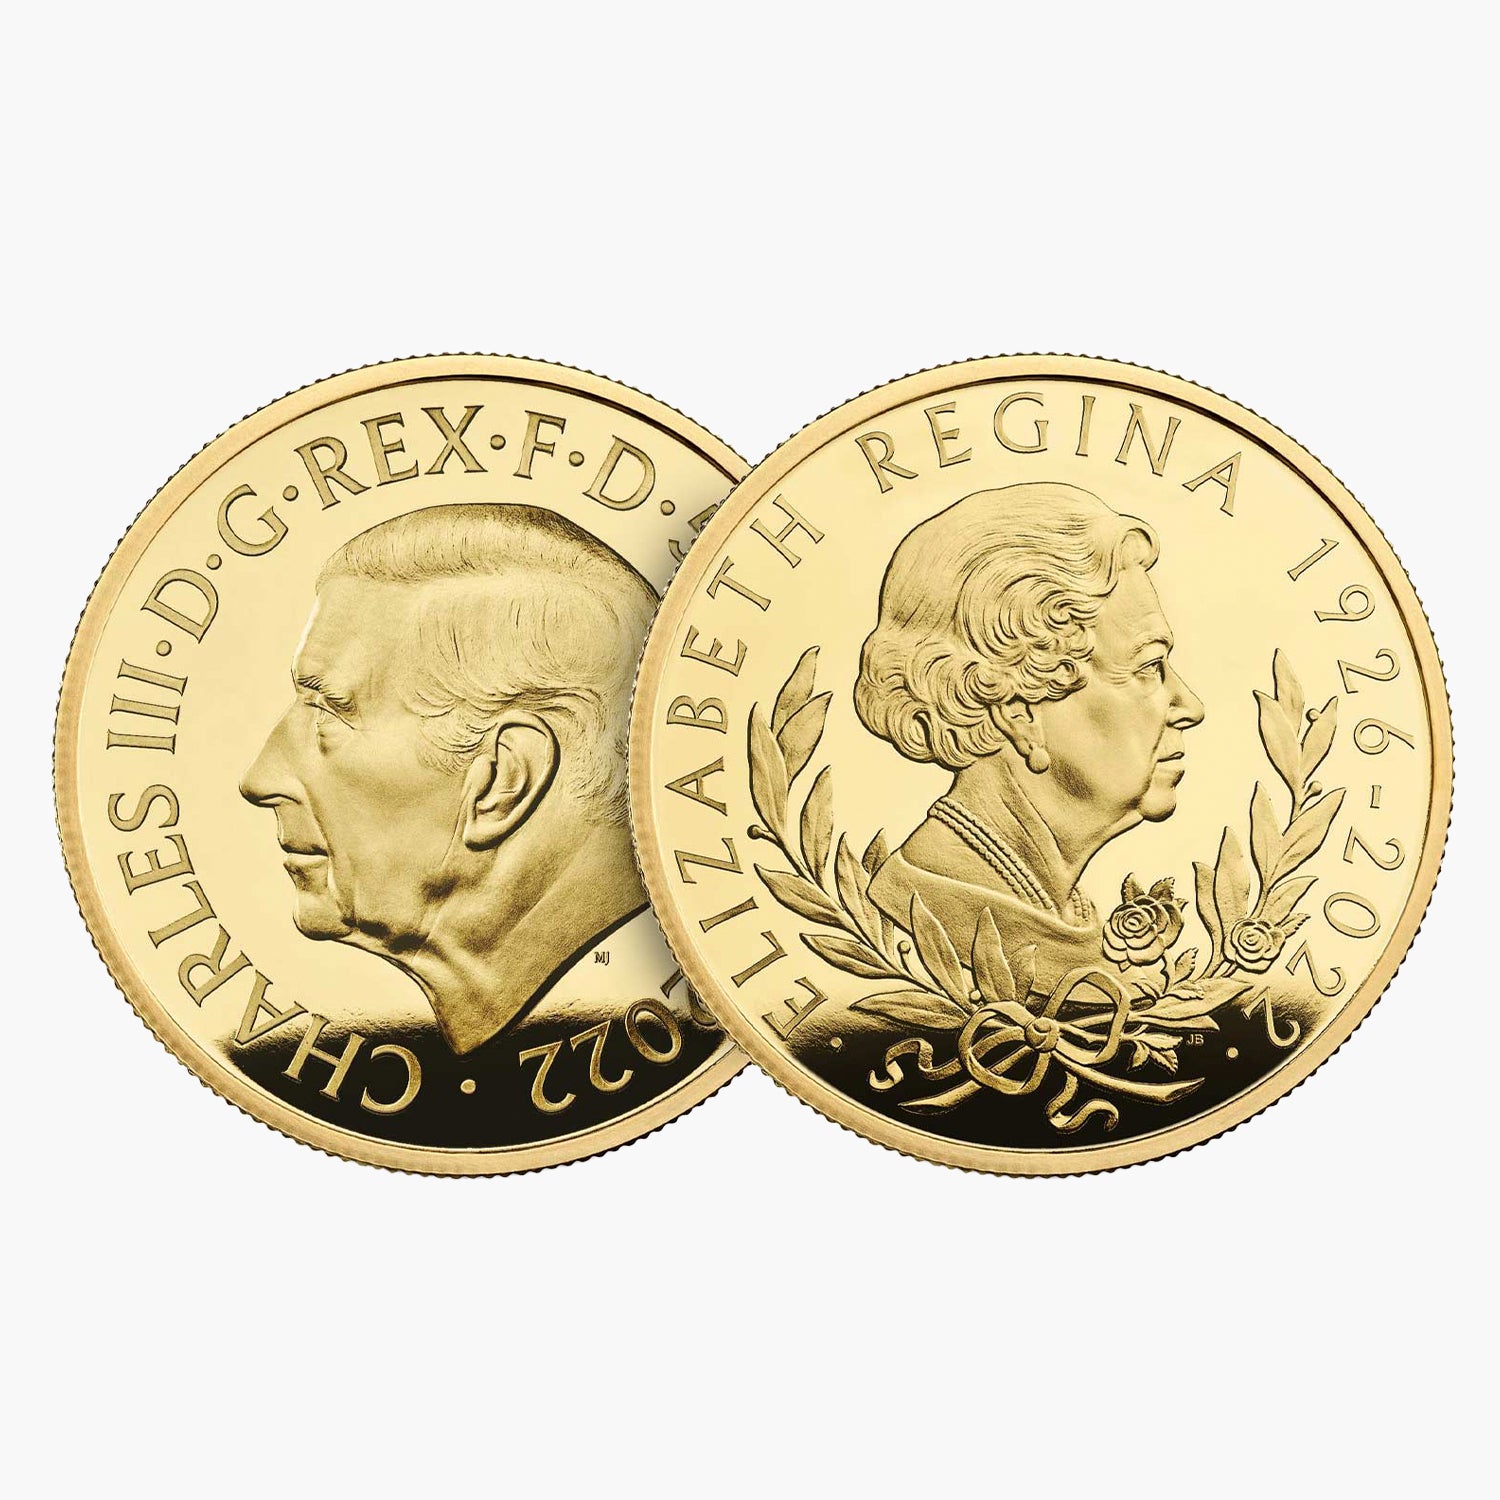 Her Majesty Queen Elizabeth II 2022 UK 1/4oz Gold Proof Coin - King Charles III first portrait